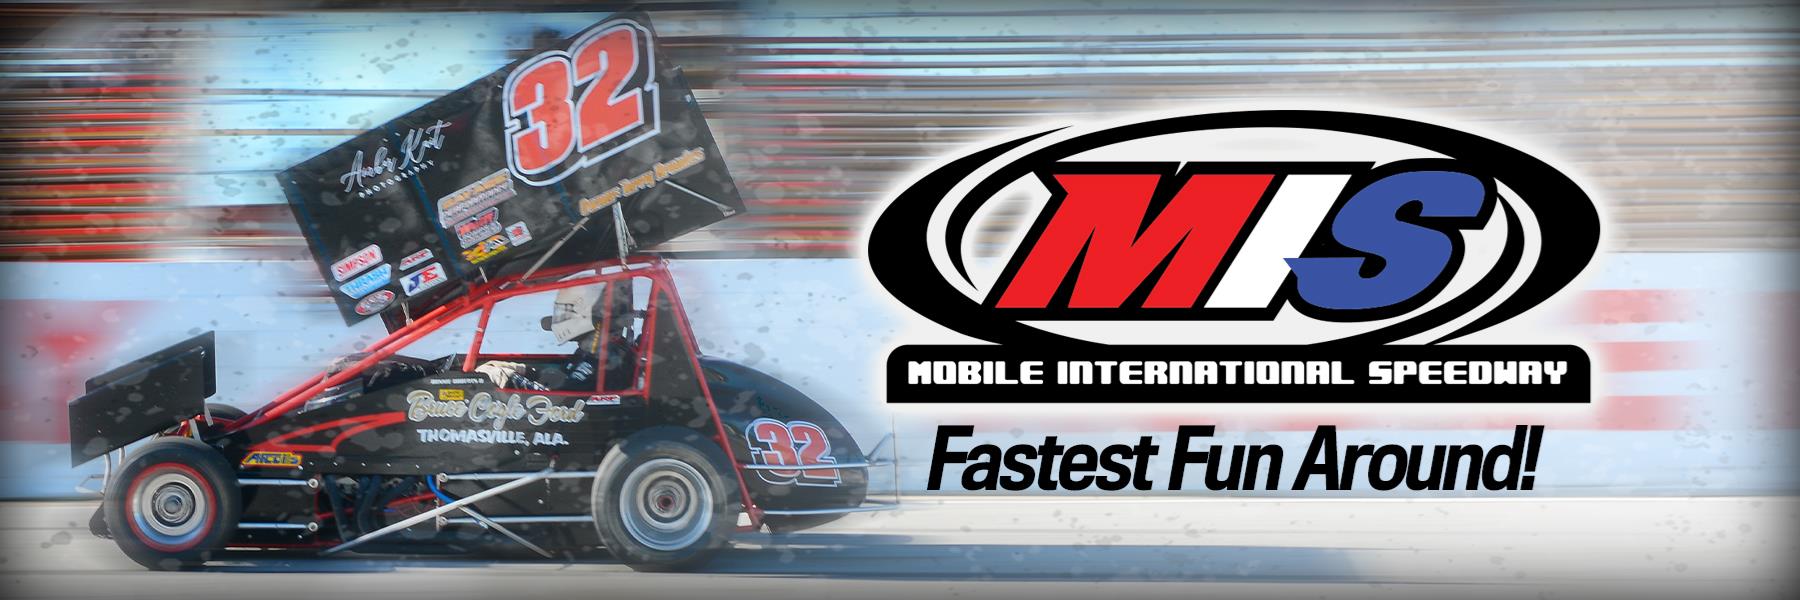 3/30/2019 - Mobile International Speedway